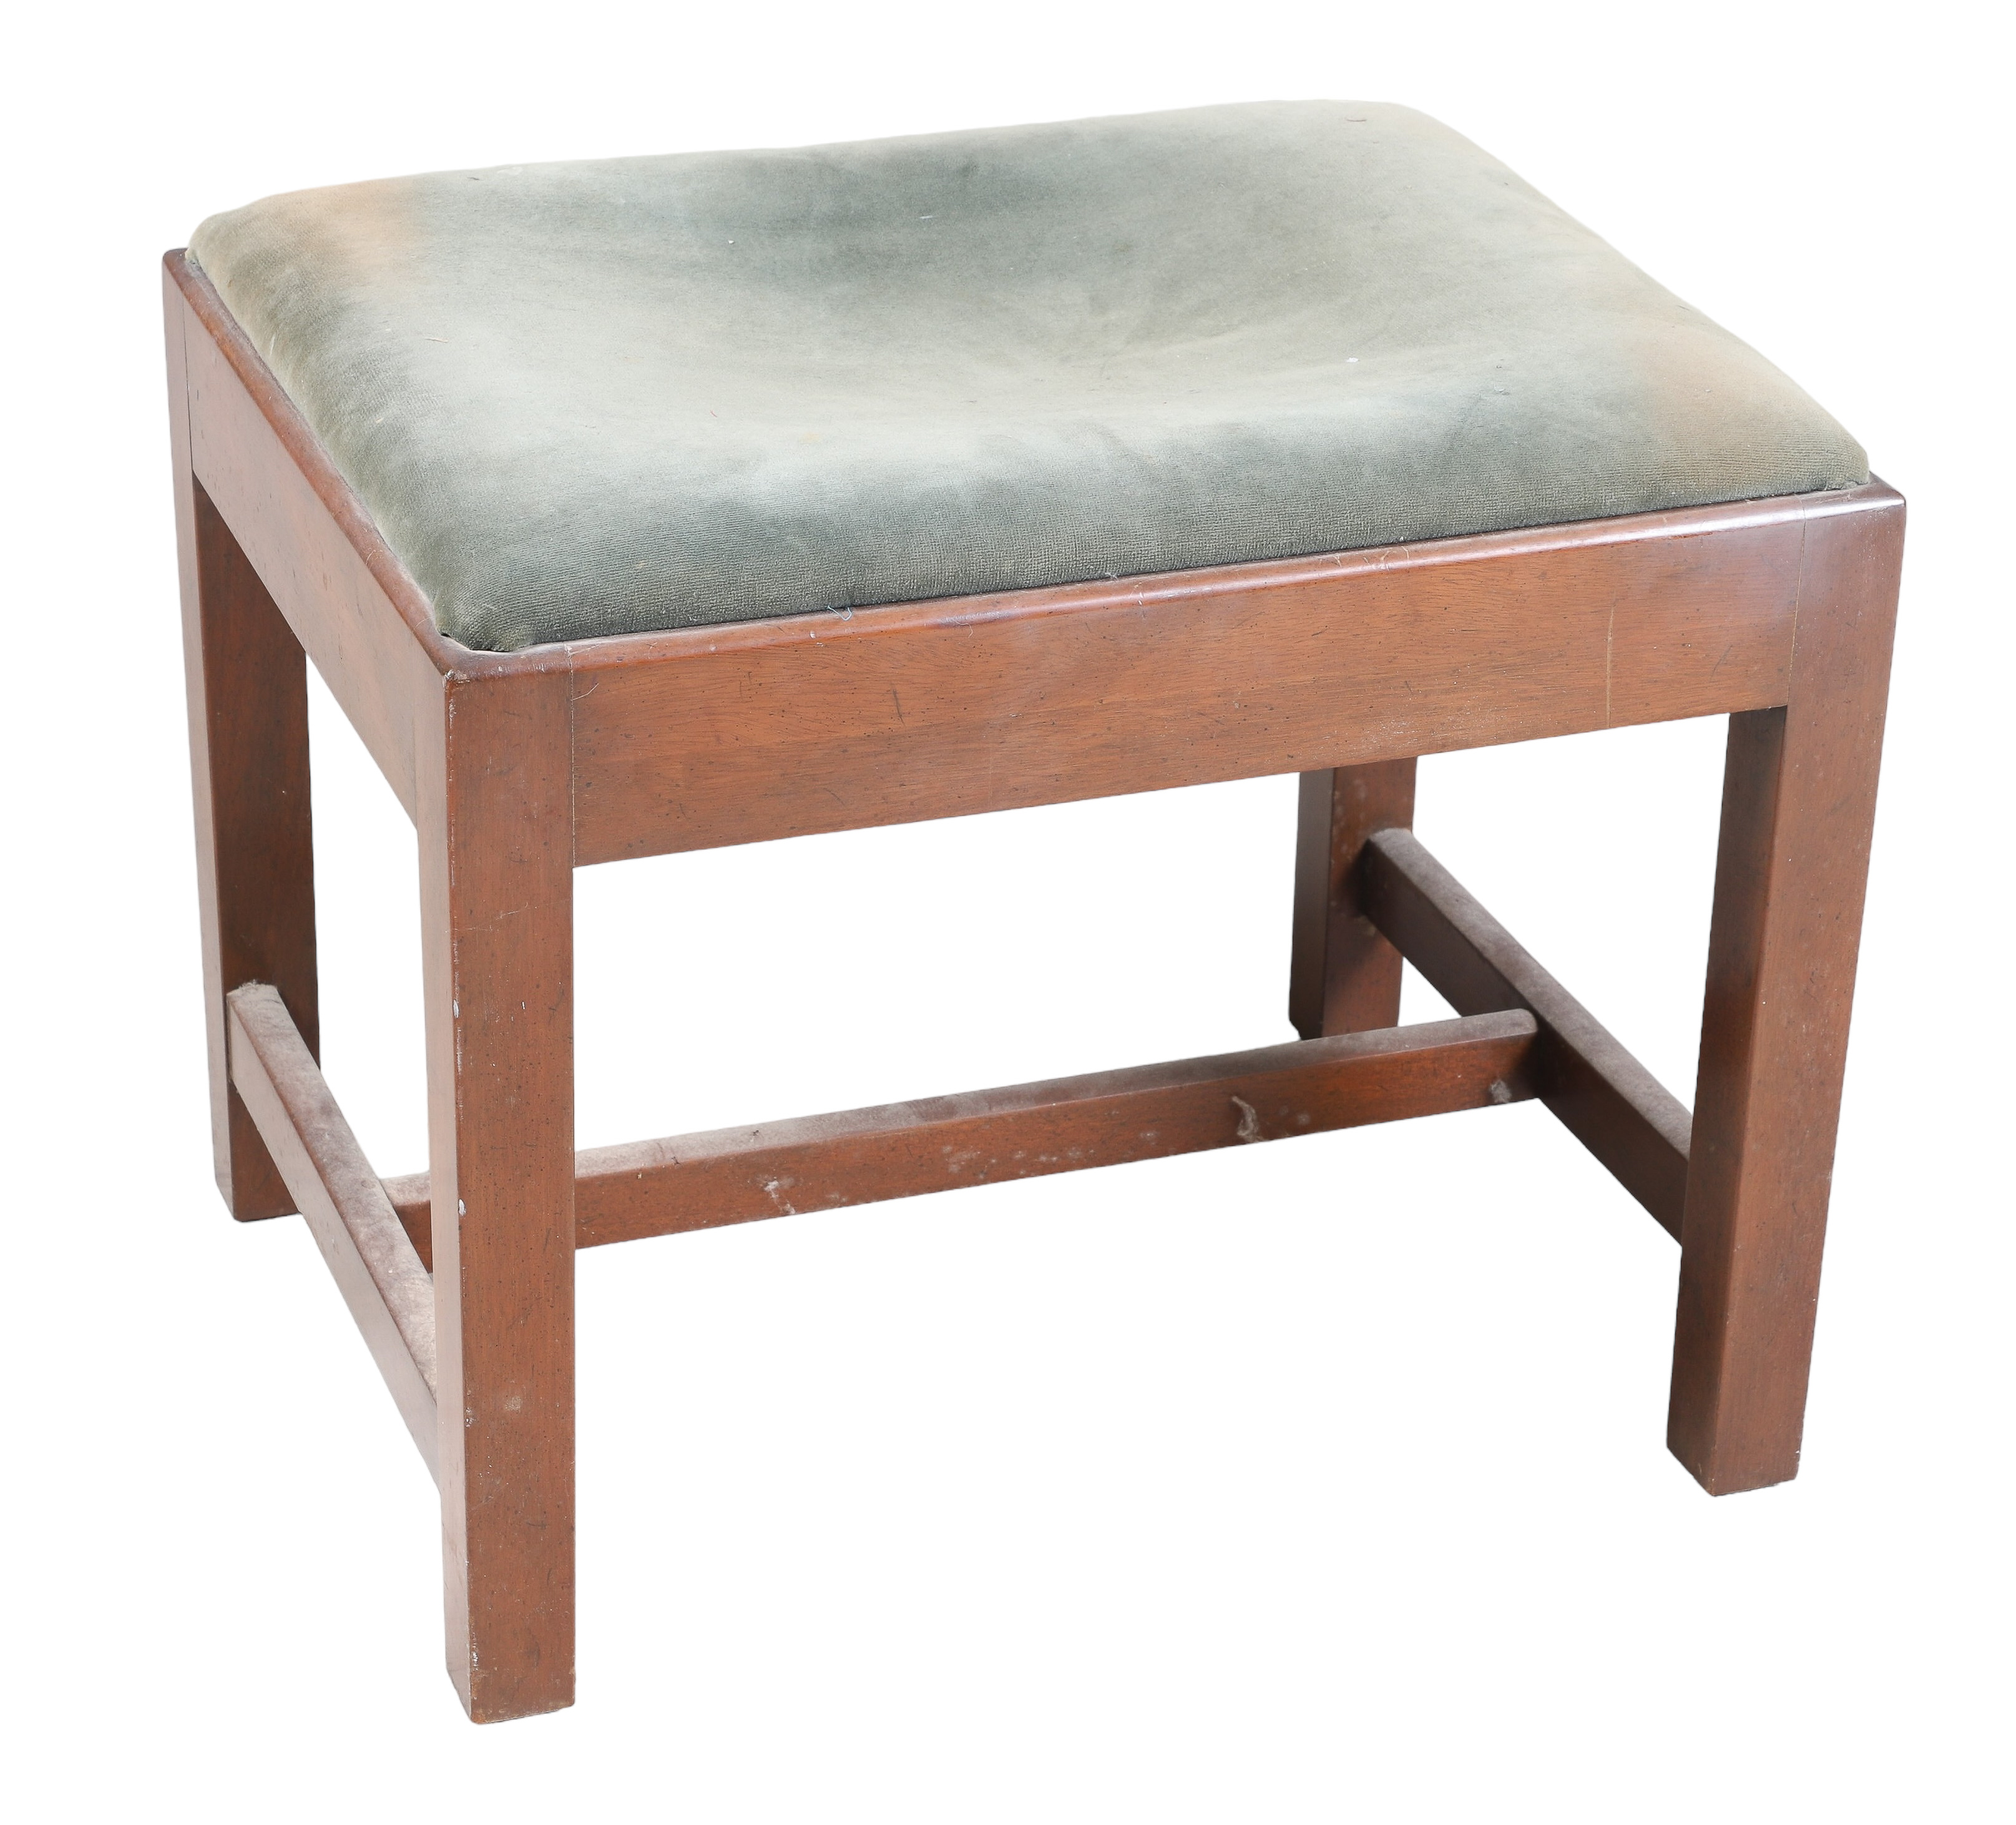 Kittinger Chippendale style footstool  2e18cc